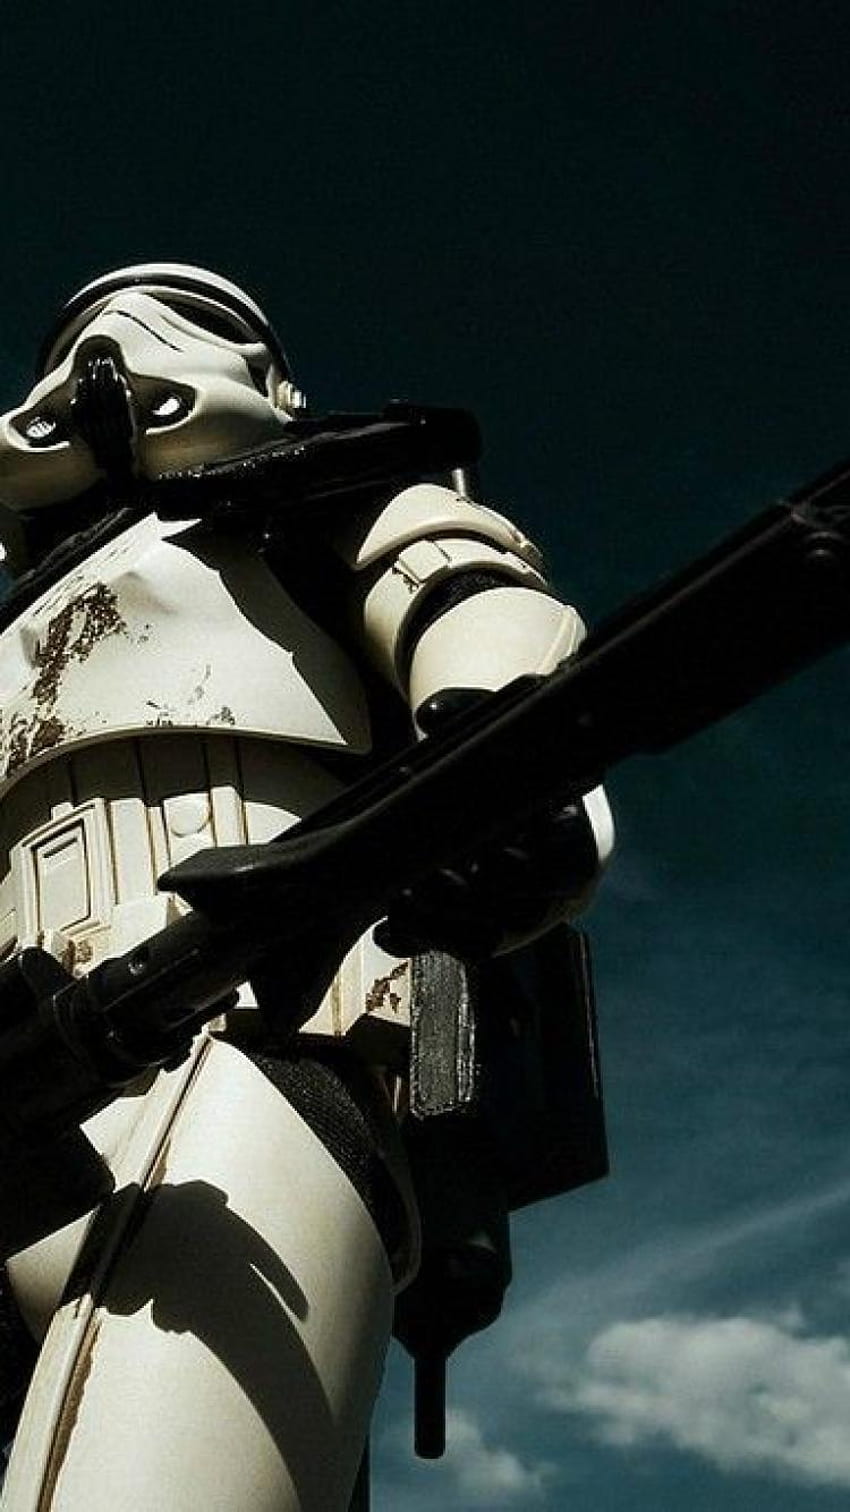 Star wars stormtroopers tentara badai kerajaan galaksi wallpaper ponsel HD